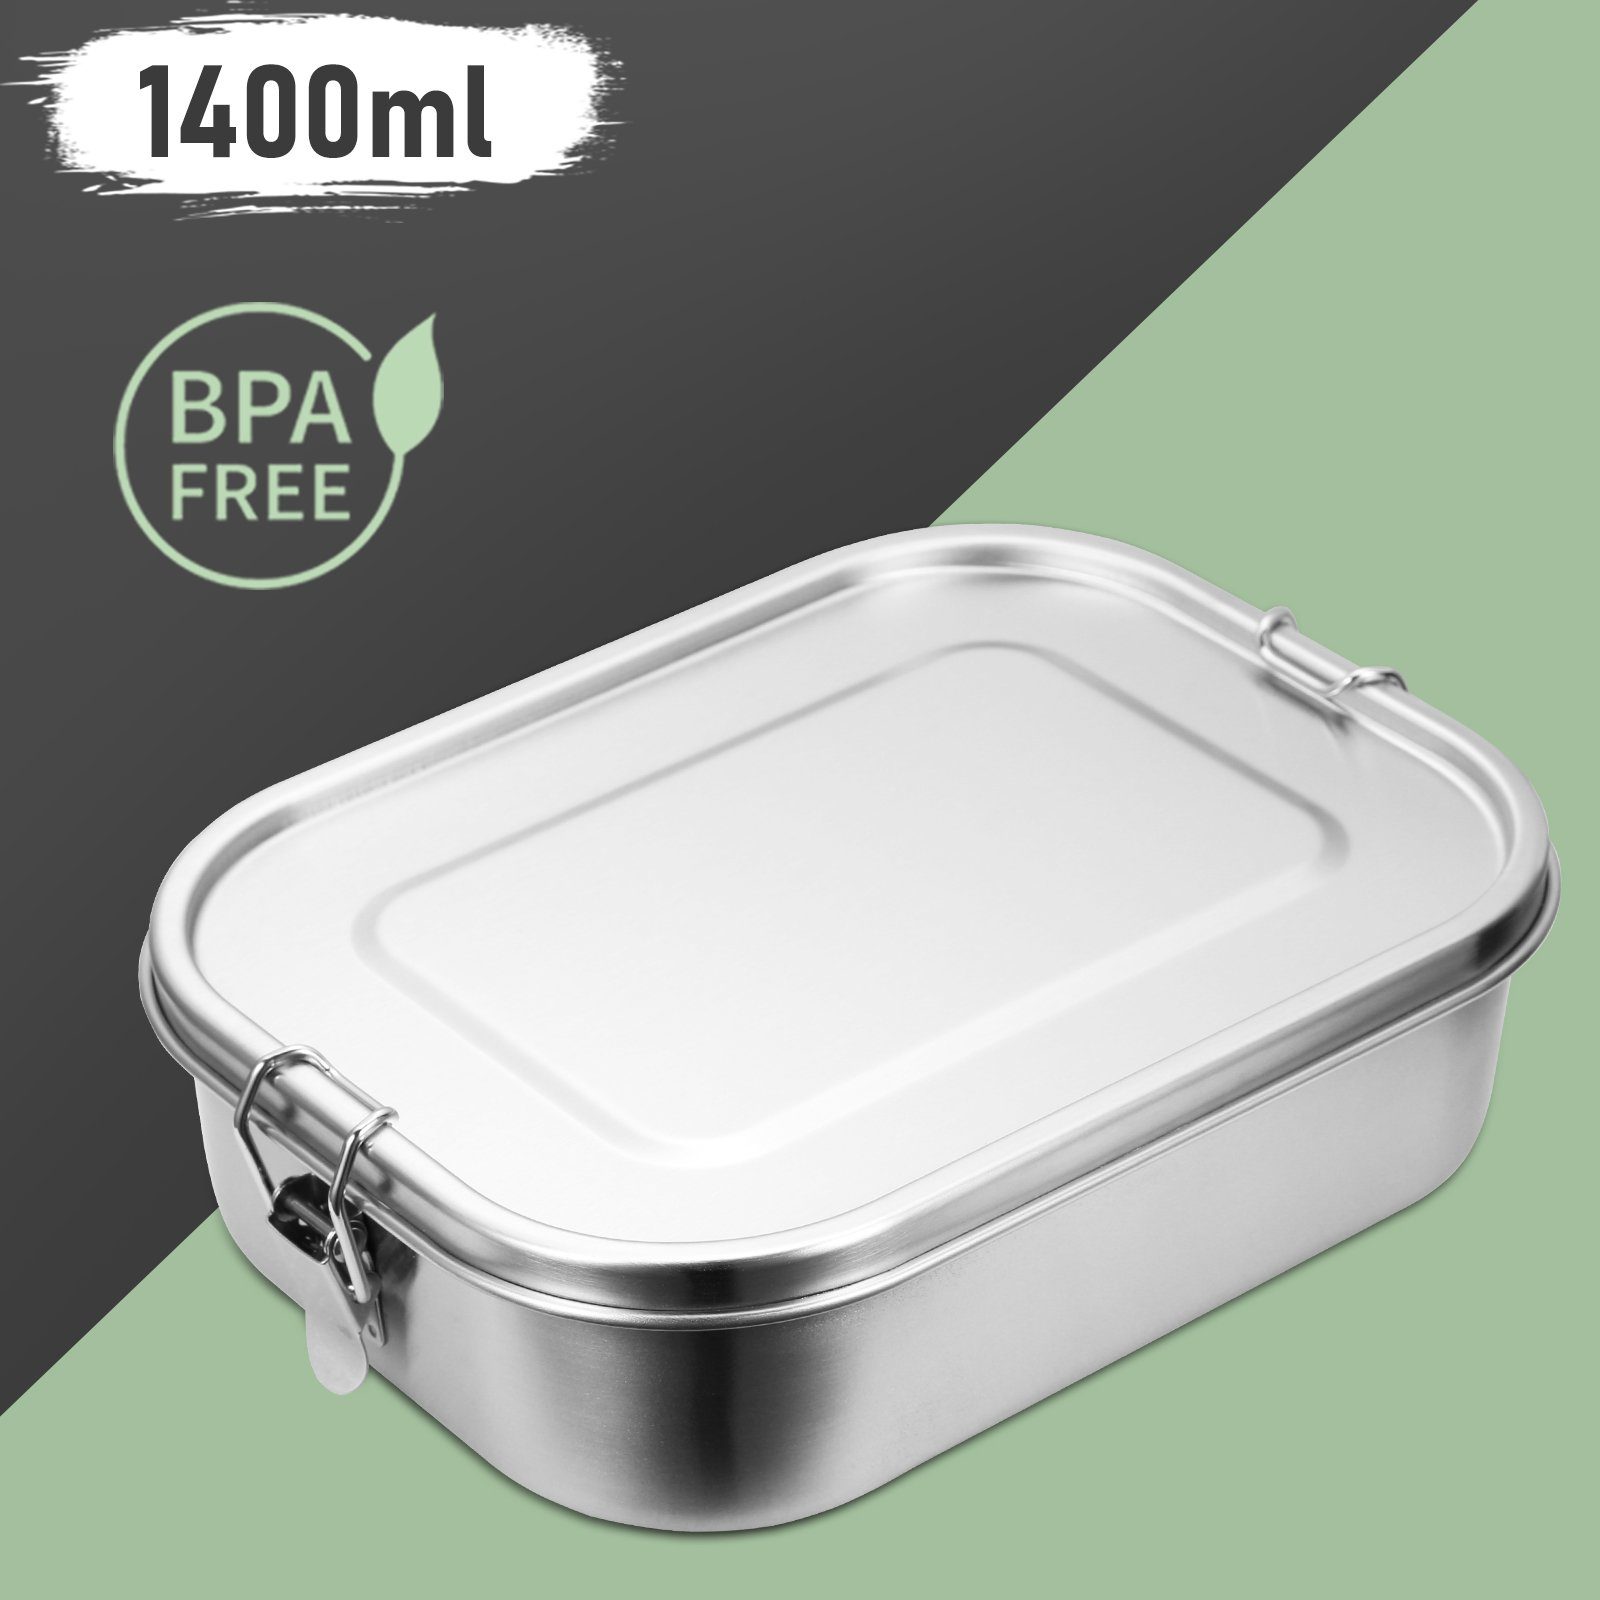 Lunchbox Edelstahl Clanmacy Metall Brotdose frei Thermobehälter BPA Brotdose Lunchbox 1400ml